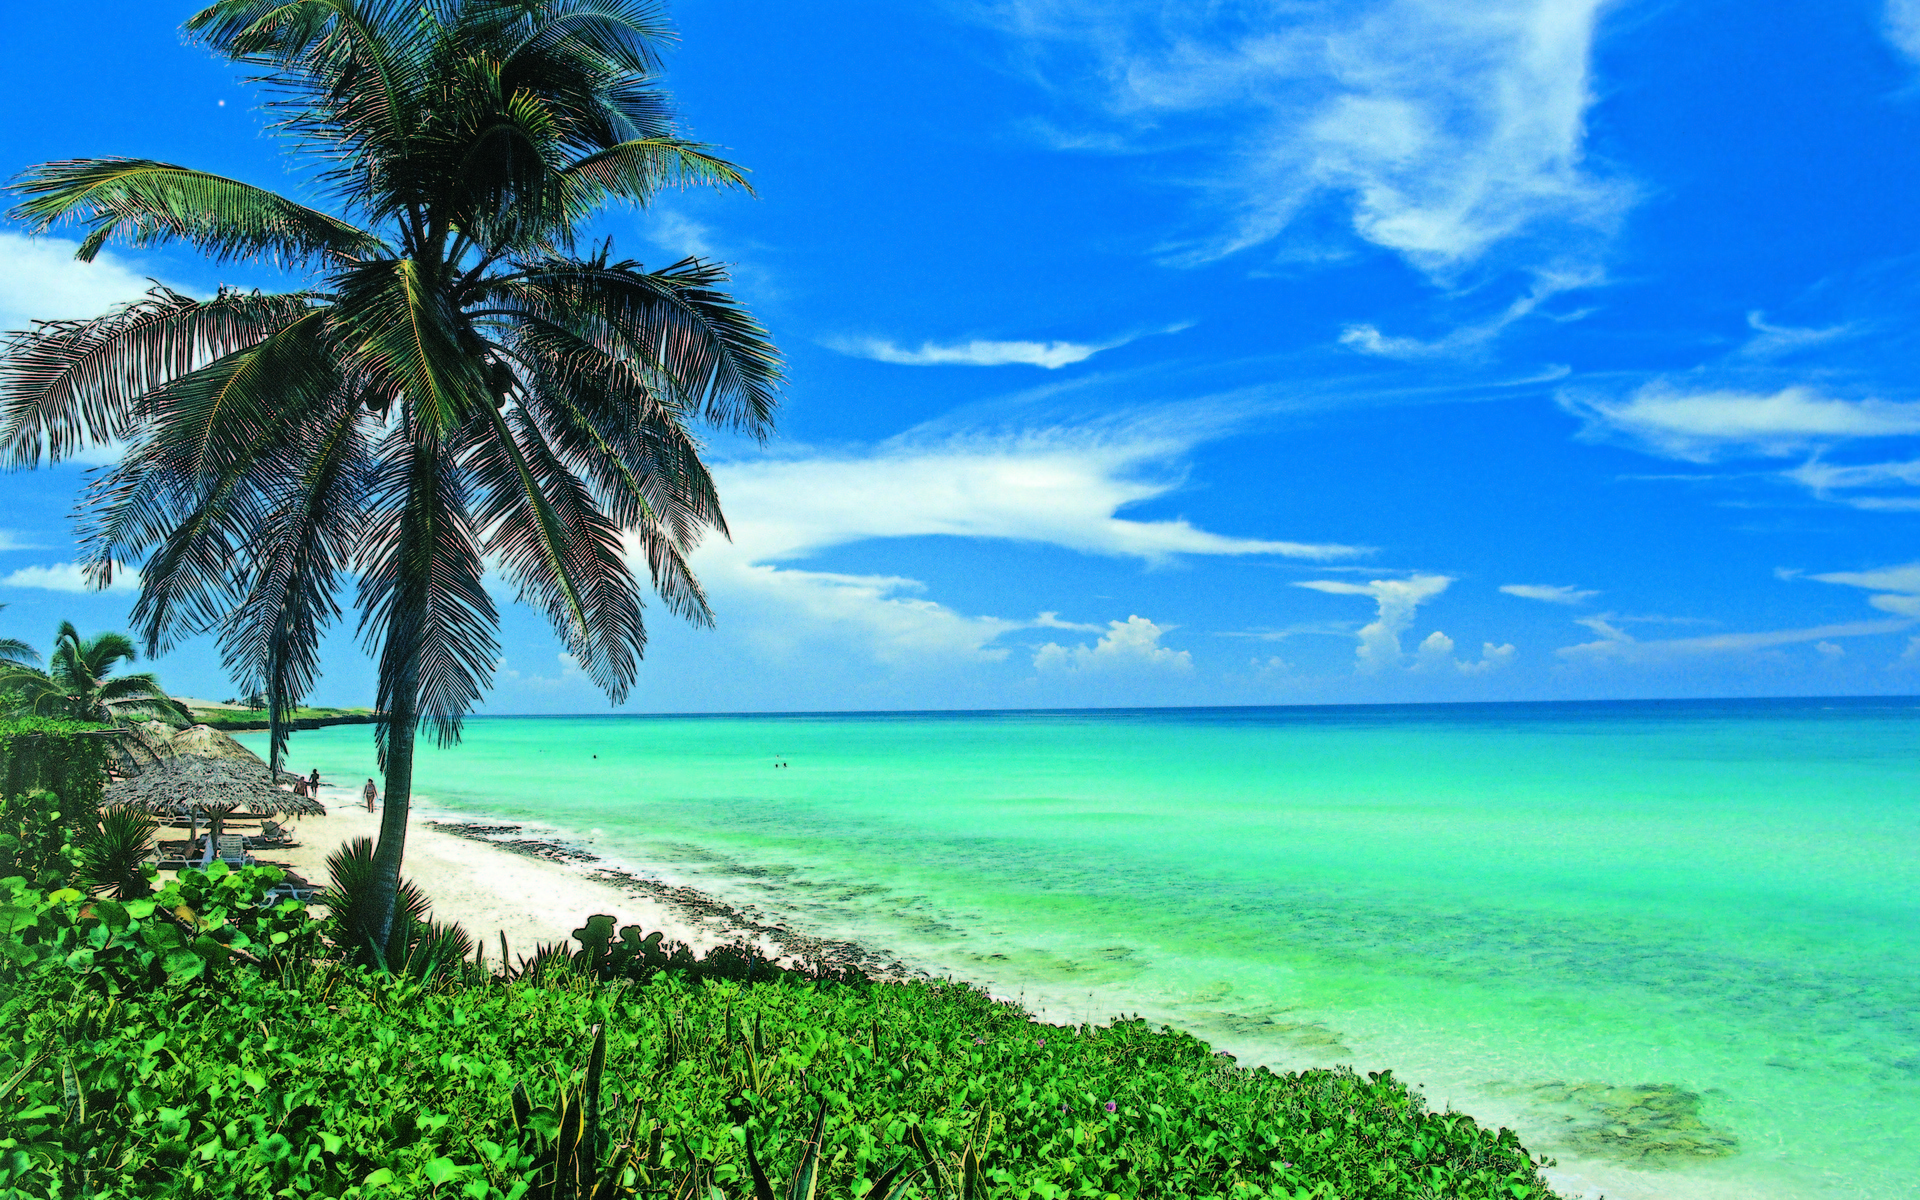 photography, beach, cuba, earth, horizon, ocean, palm tree, sea, turquoise High Definition image